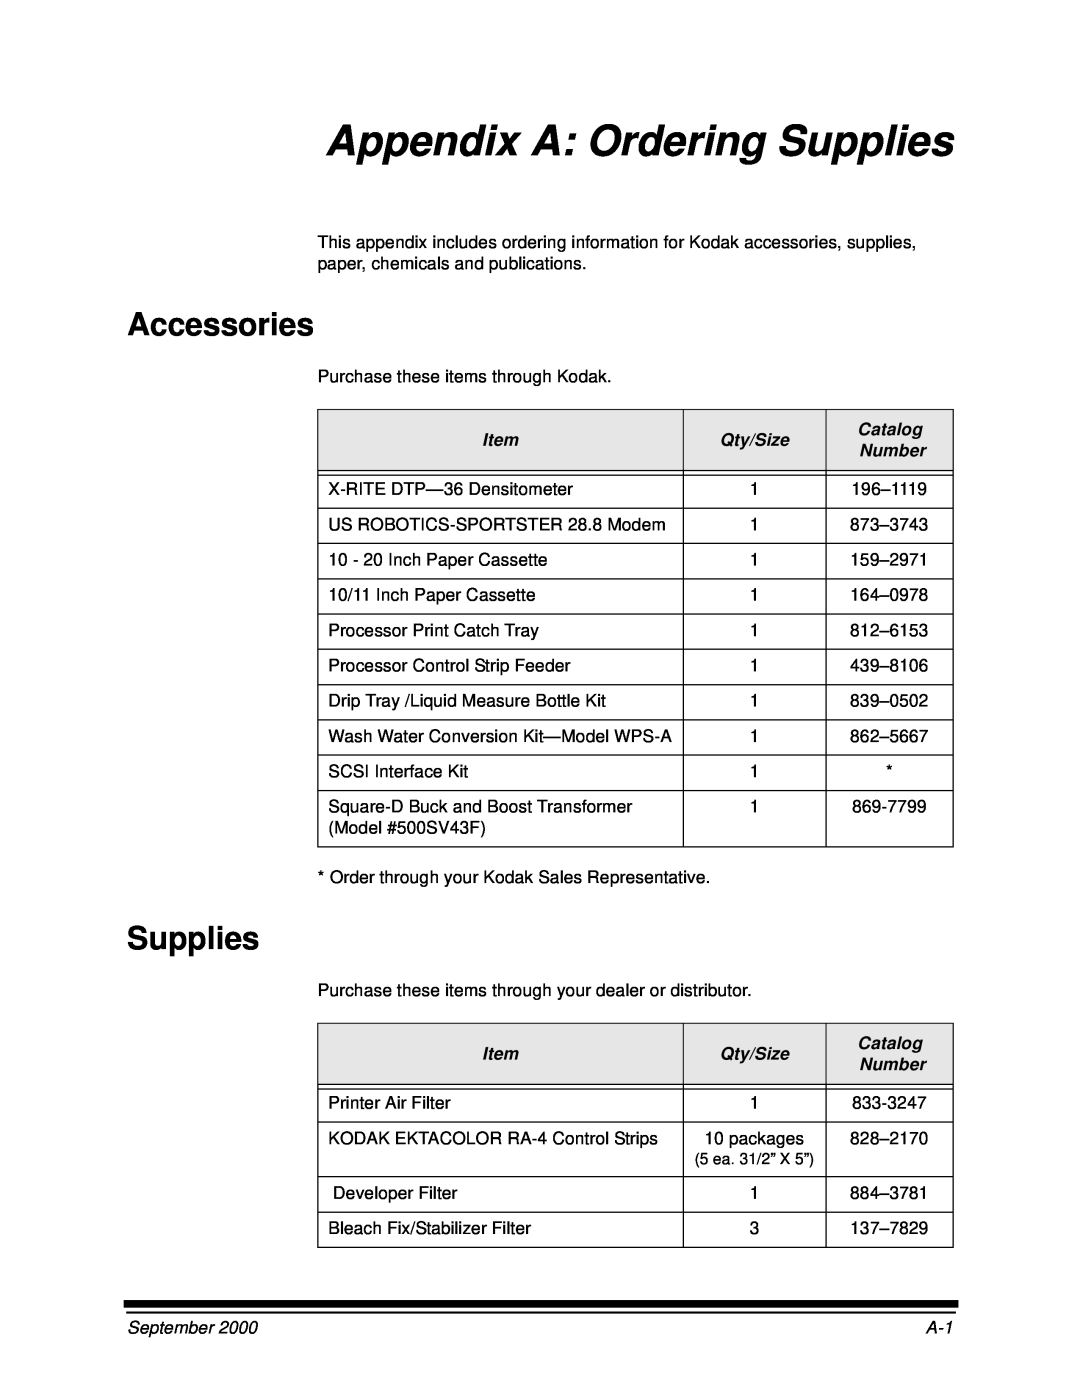 Kodak 20P manual Appendix A Ordering Supplies, Accessories, Item, Qty/Size, Catalog, Number, September 